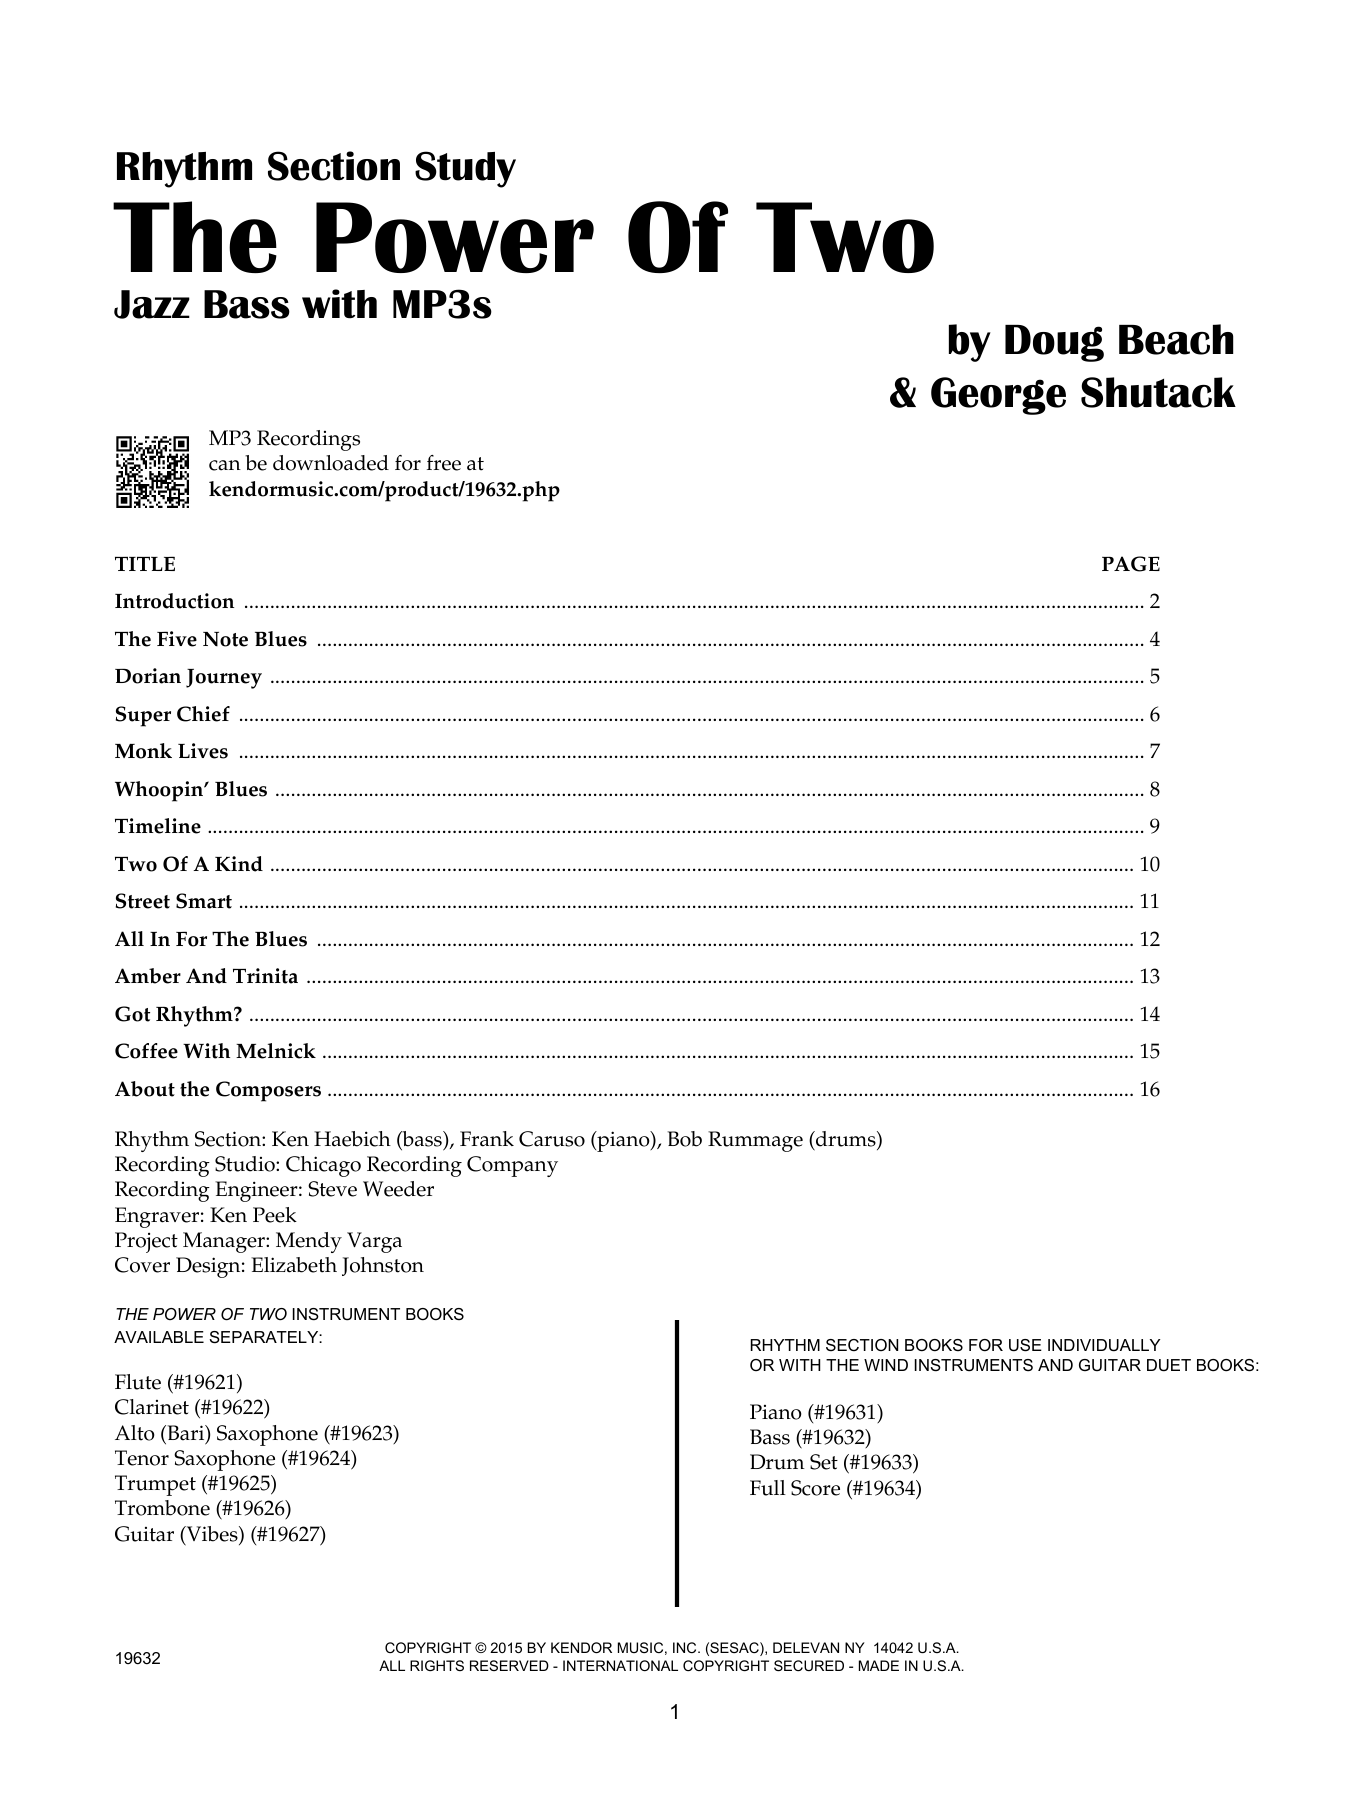 Download Doug Beach & George Shutack The Power Of Two - Bass - Bass Sheet Music